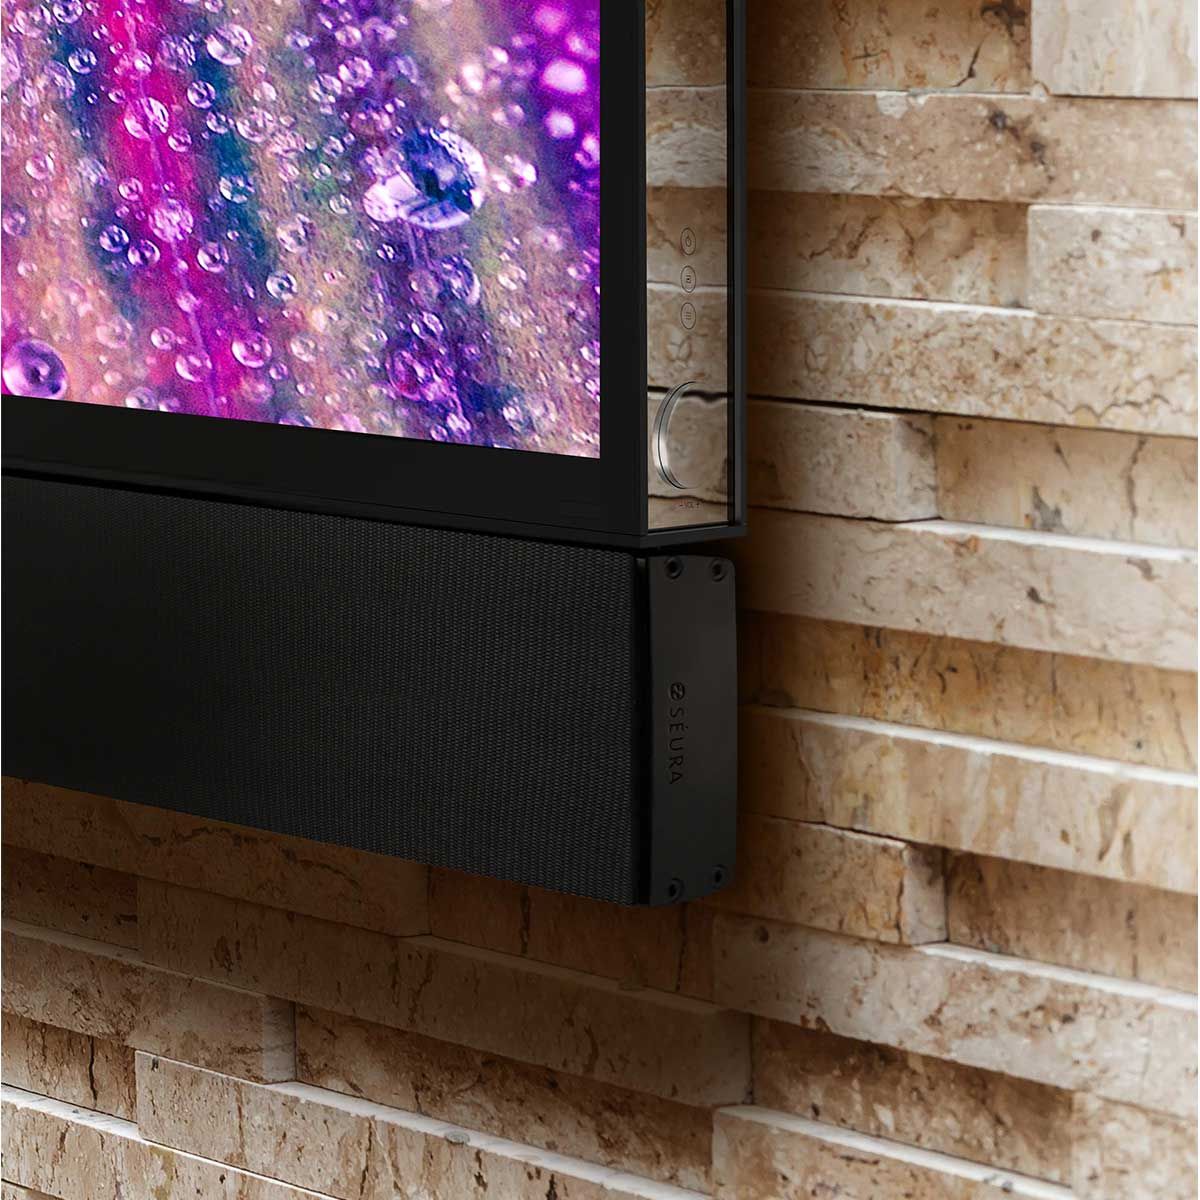 Seura Ultra Bright Outdoor 4K UHD TV, panel and soundbar detail